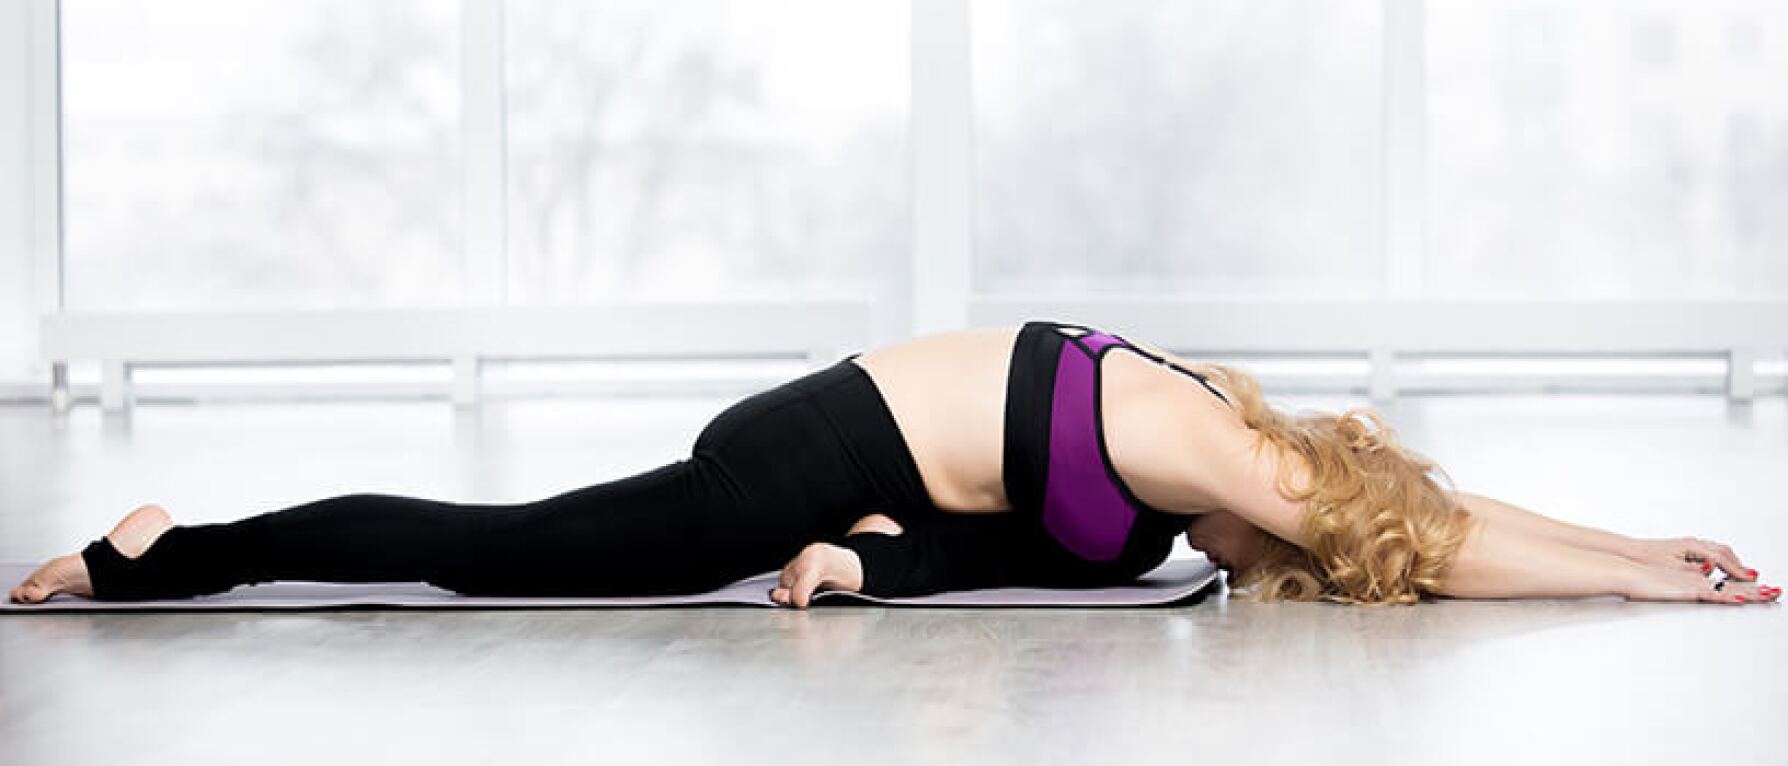 5 Yin Yoga Poses for Beginners | Yin Yoga Sequence Benefits